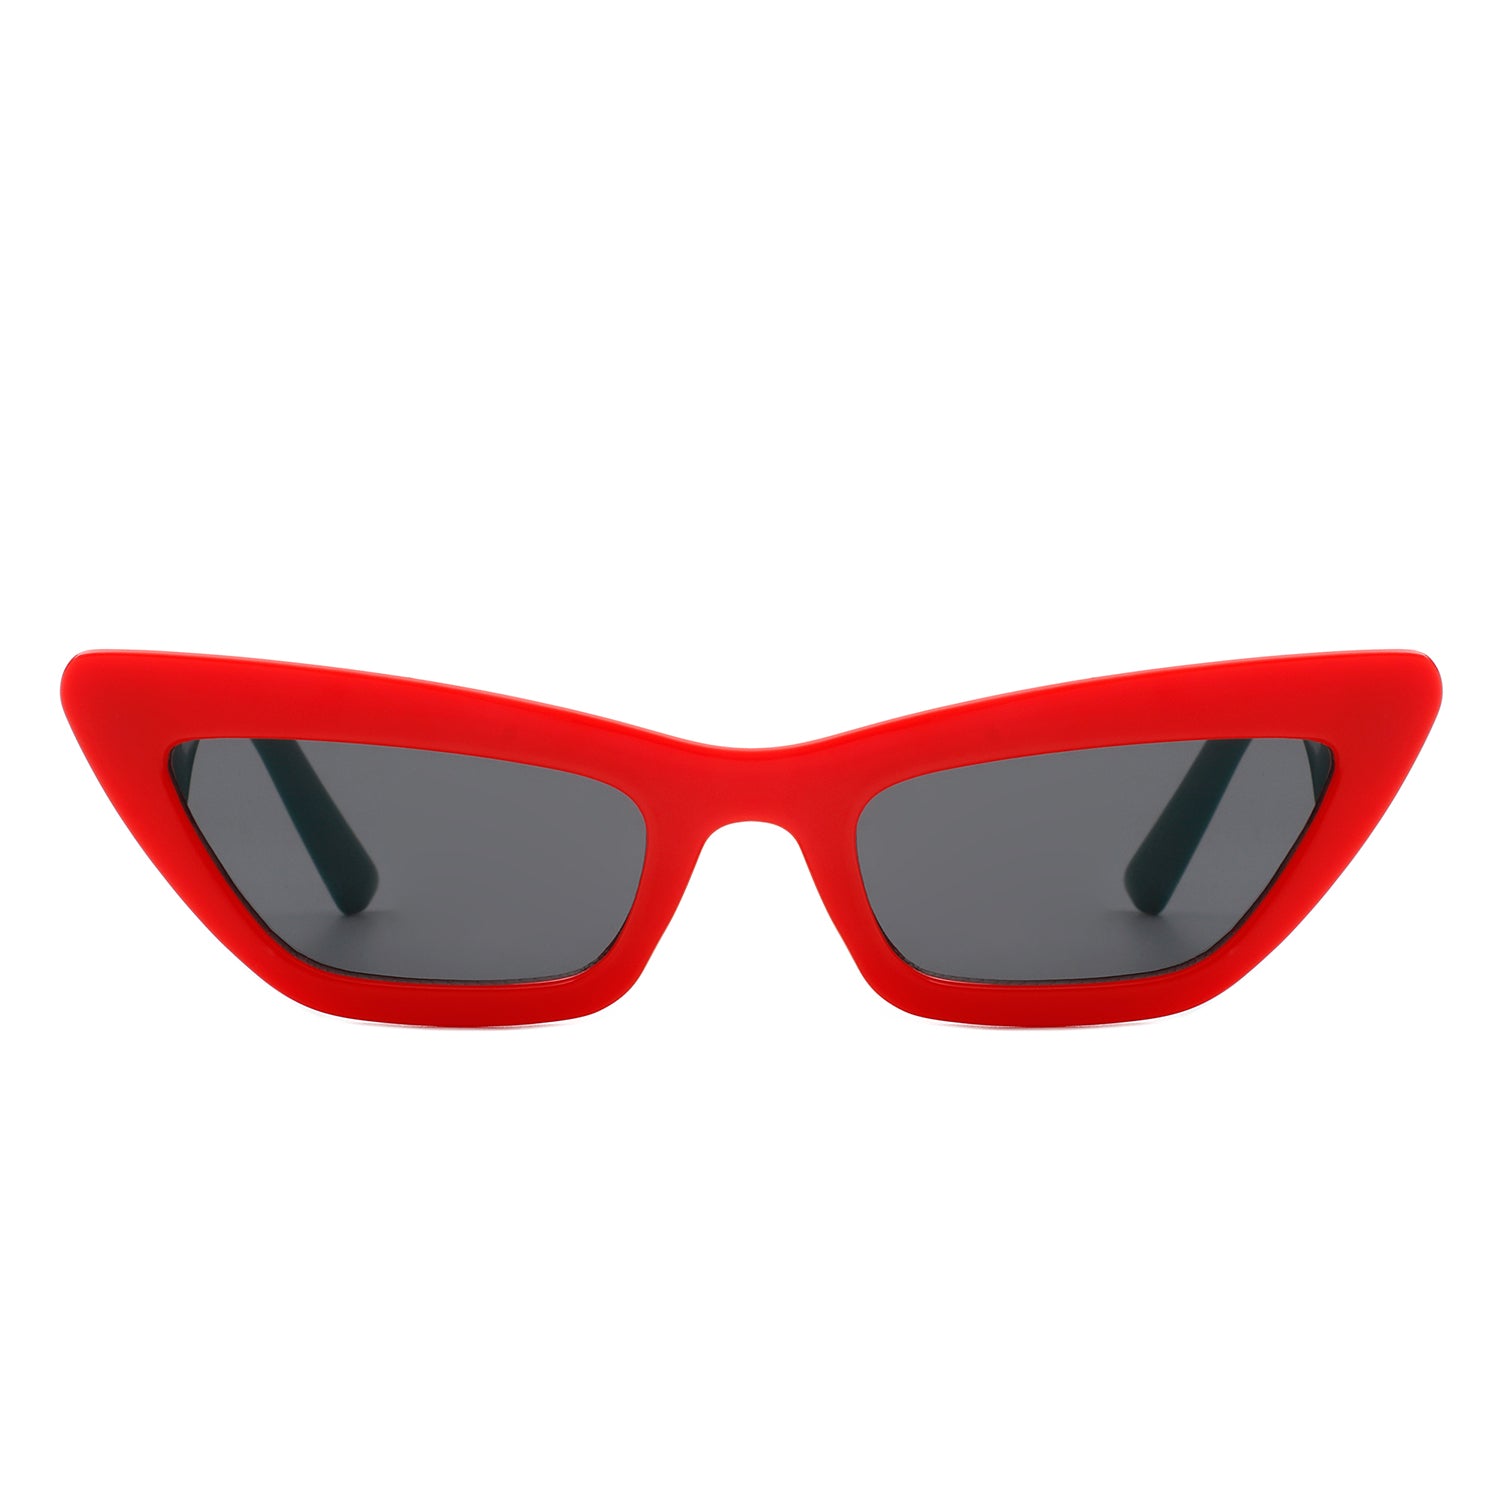 Saint Laurent Eyewear Women's Narrow Cat-Eye Sunglasses